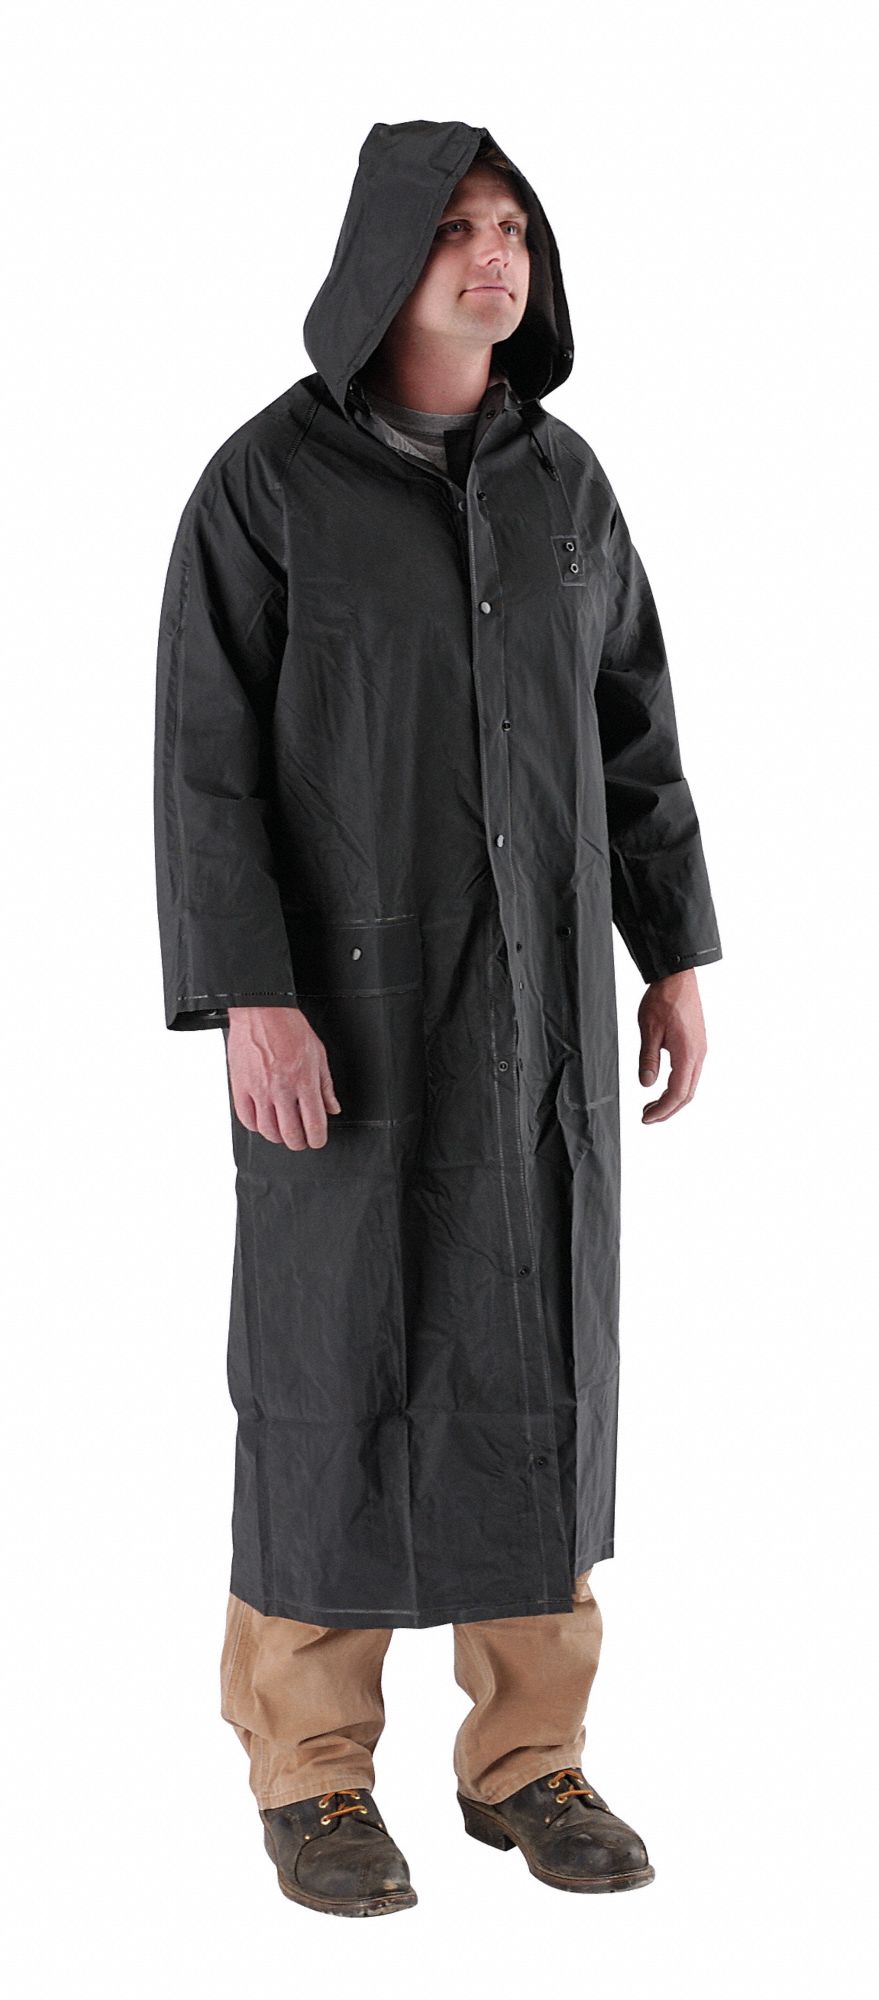 MCR SAFETY Rider Raincoat, Black, L - 8RMC9|267CL - Grainger